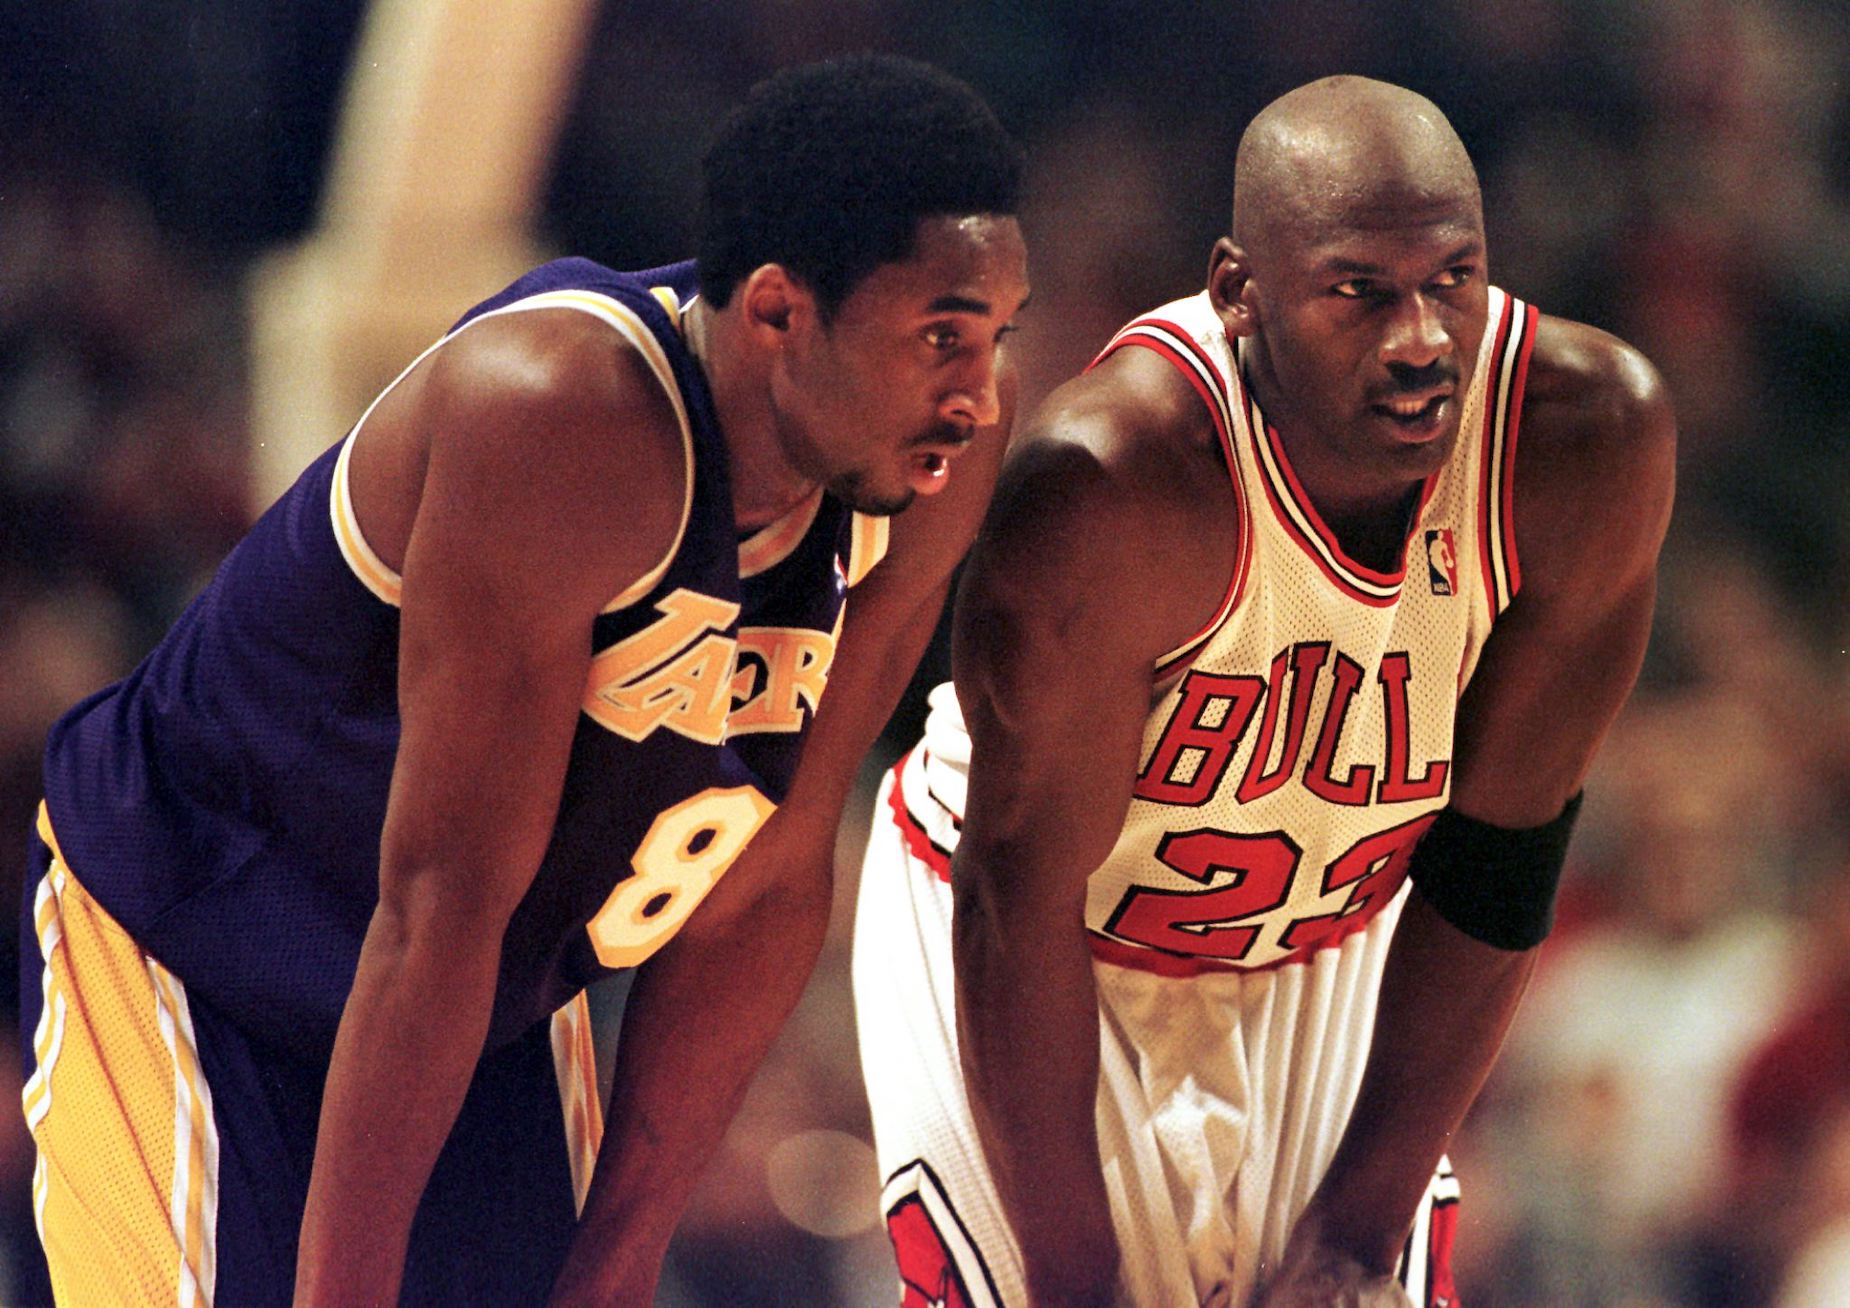 Best Selling NBA Jerseys of All-Time: MJ, Bird, LeBron, Kobe, Dr